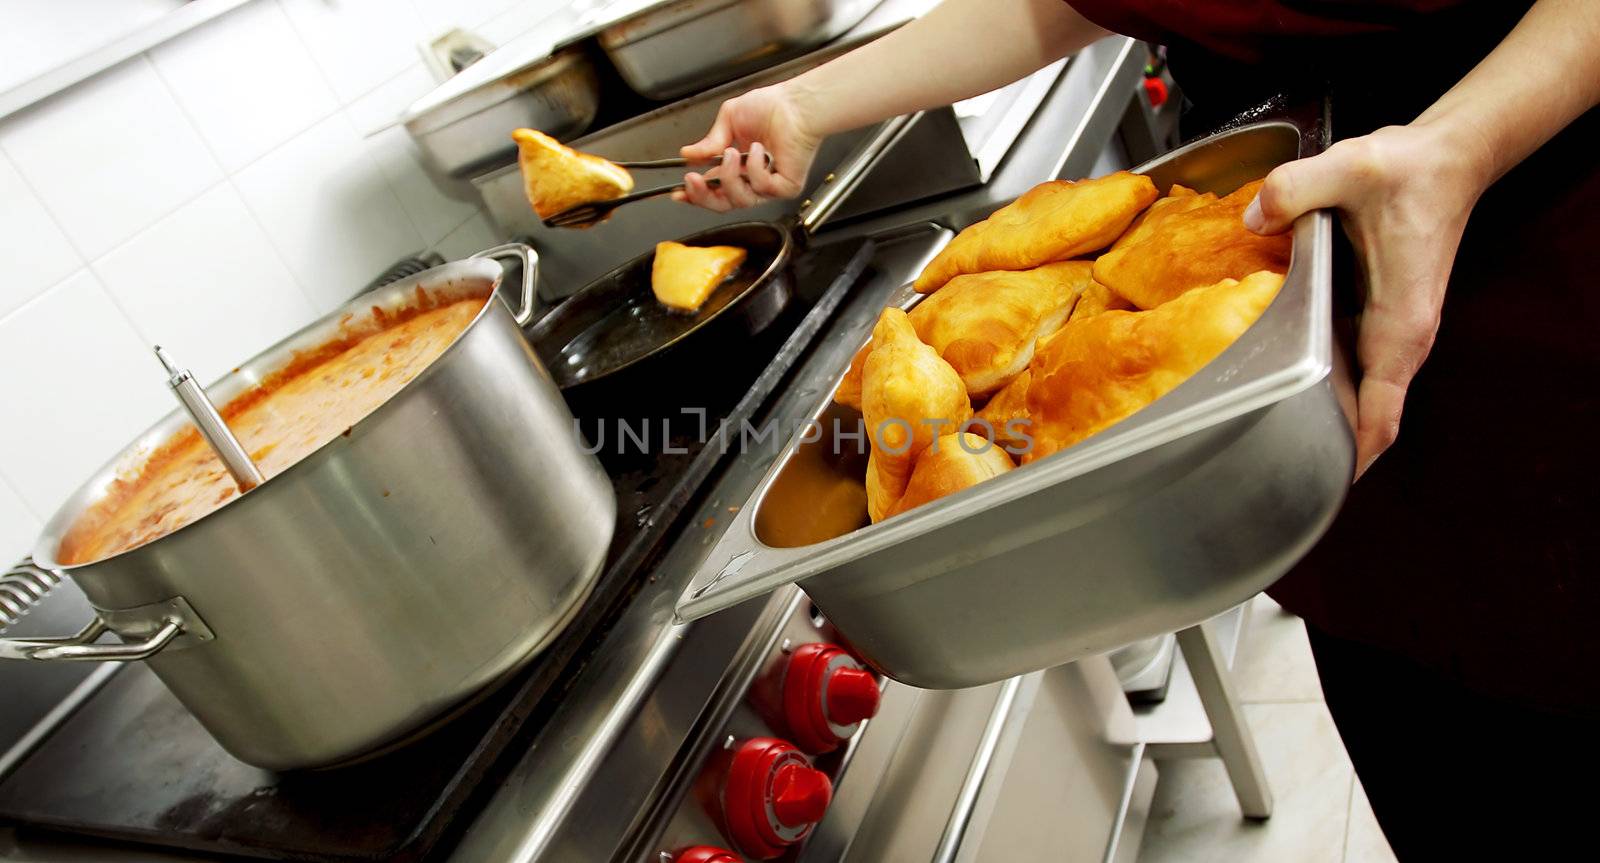 batter fried in a restaurant kitchen by vilevi